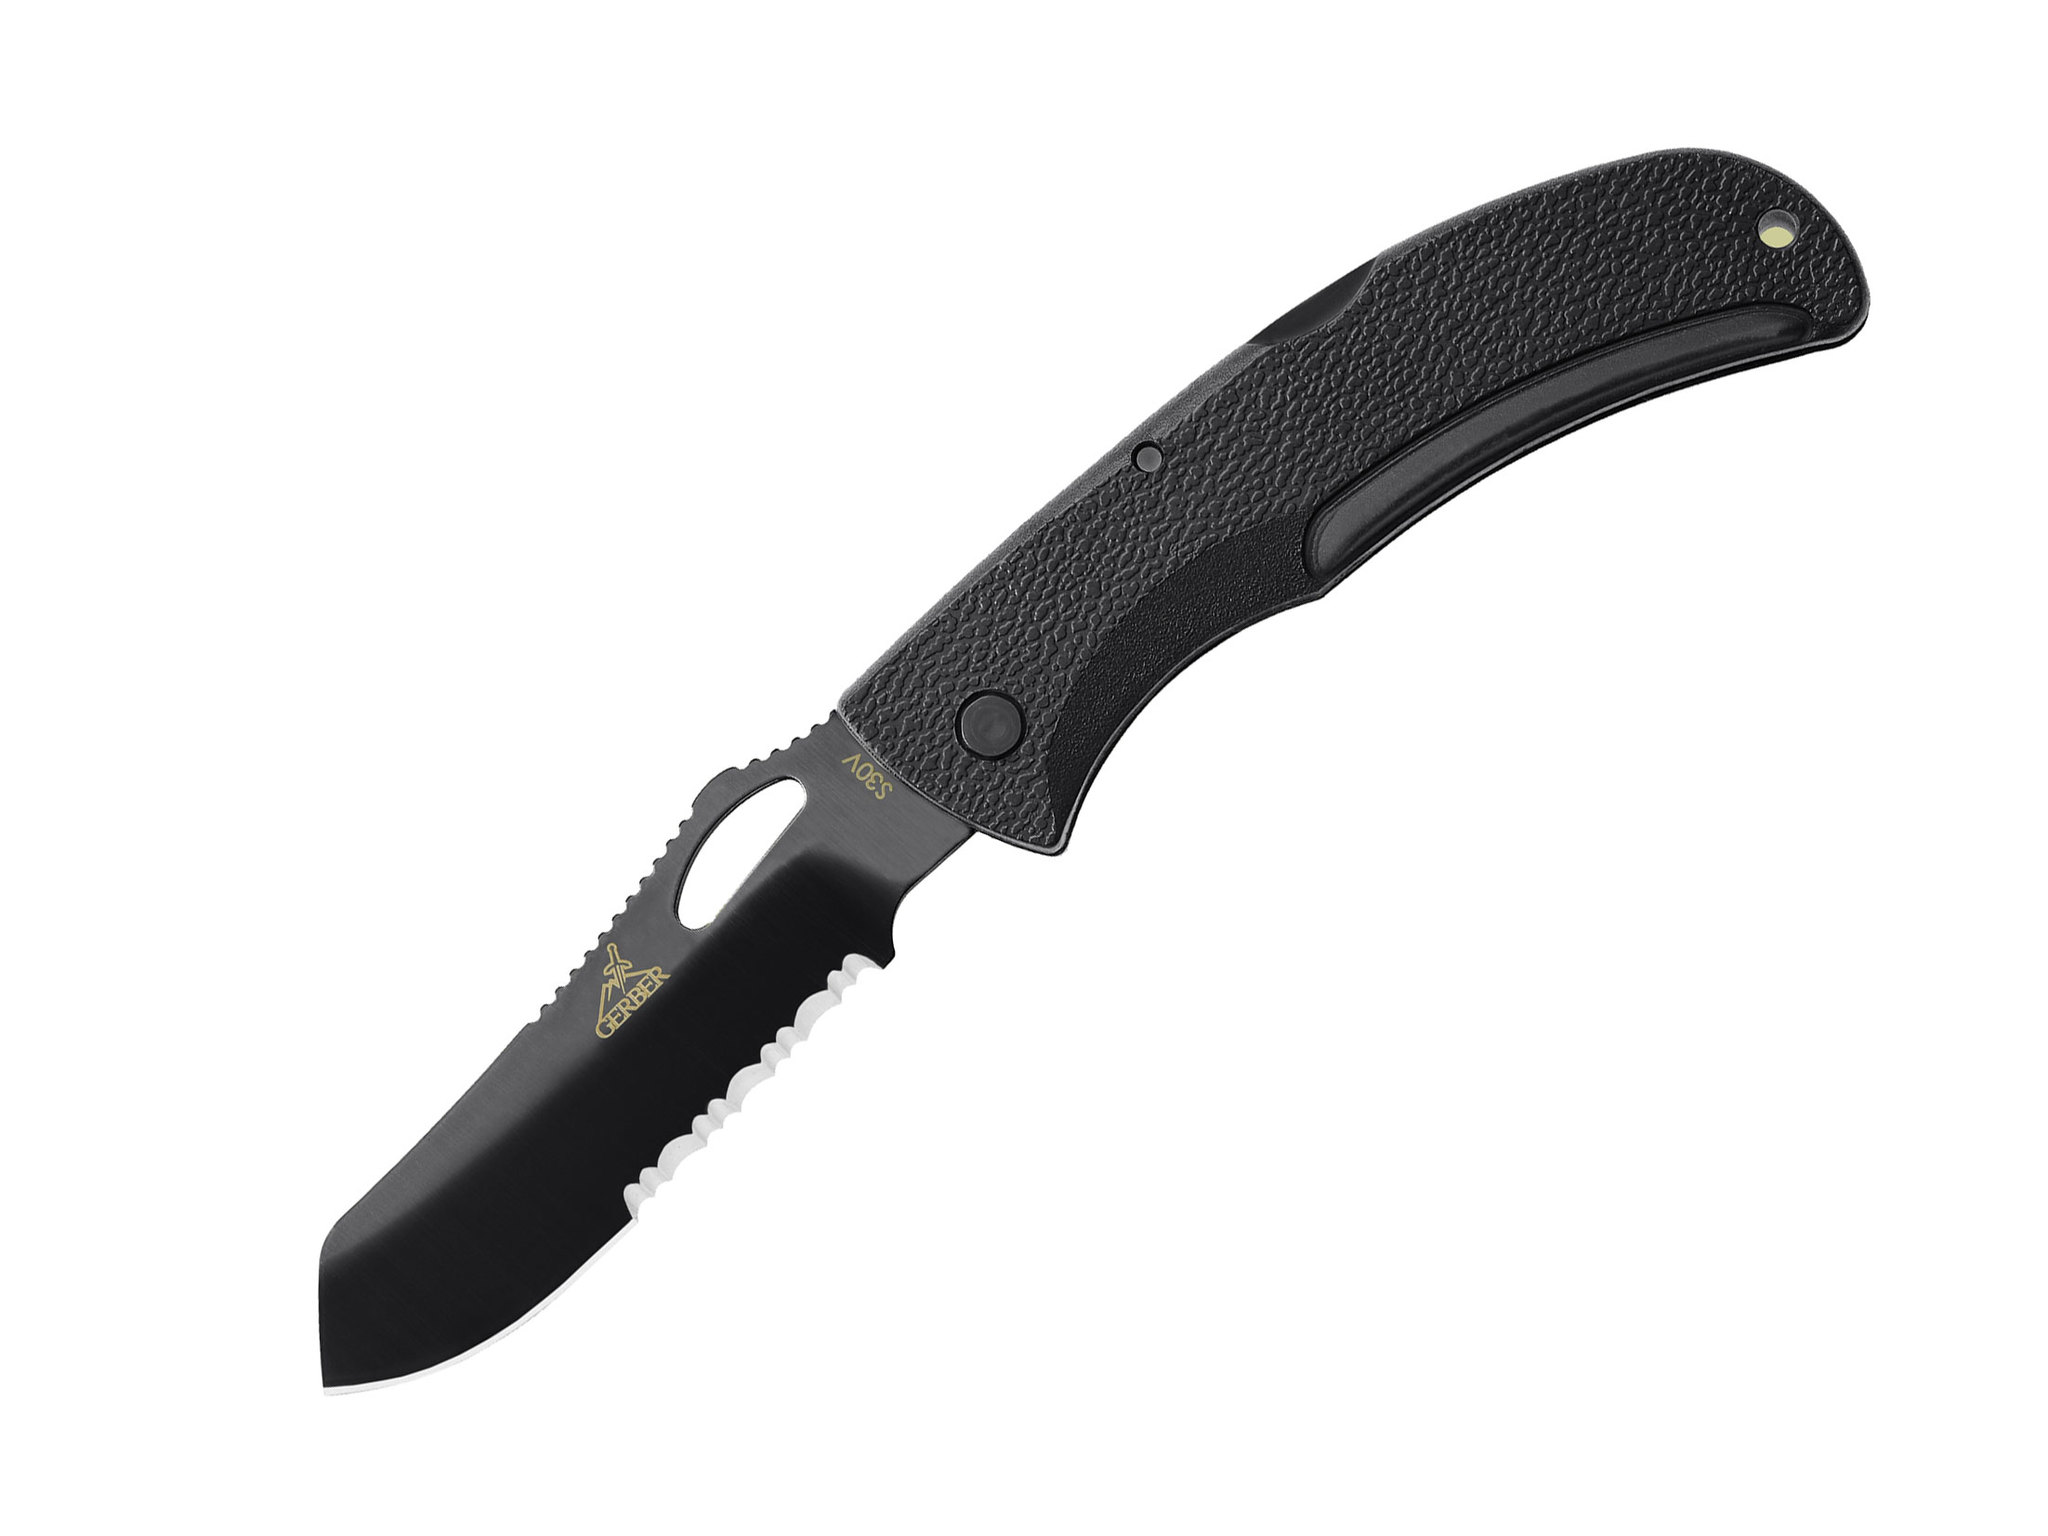 Складной нож Gerber E-Z Out Black, сталь CPM-S30V, рукоять термопластик GRN нож gerber freescape paring knife сталь 7cr17mov black oxide coating рукоять резина 31 002886